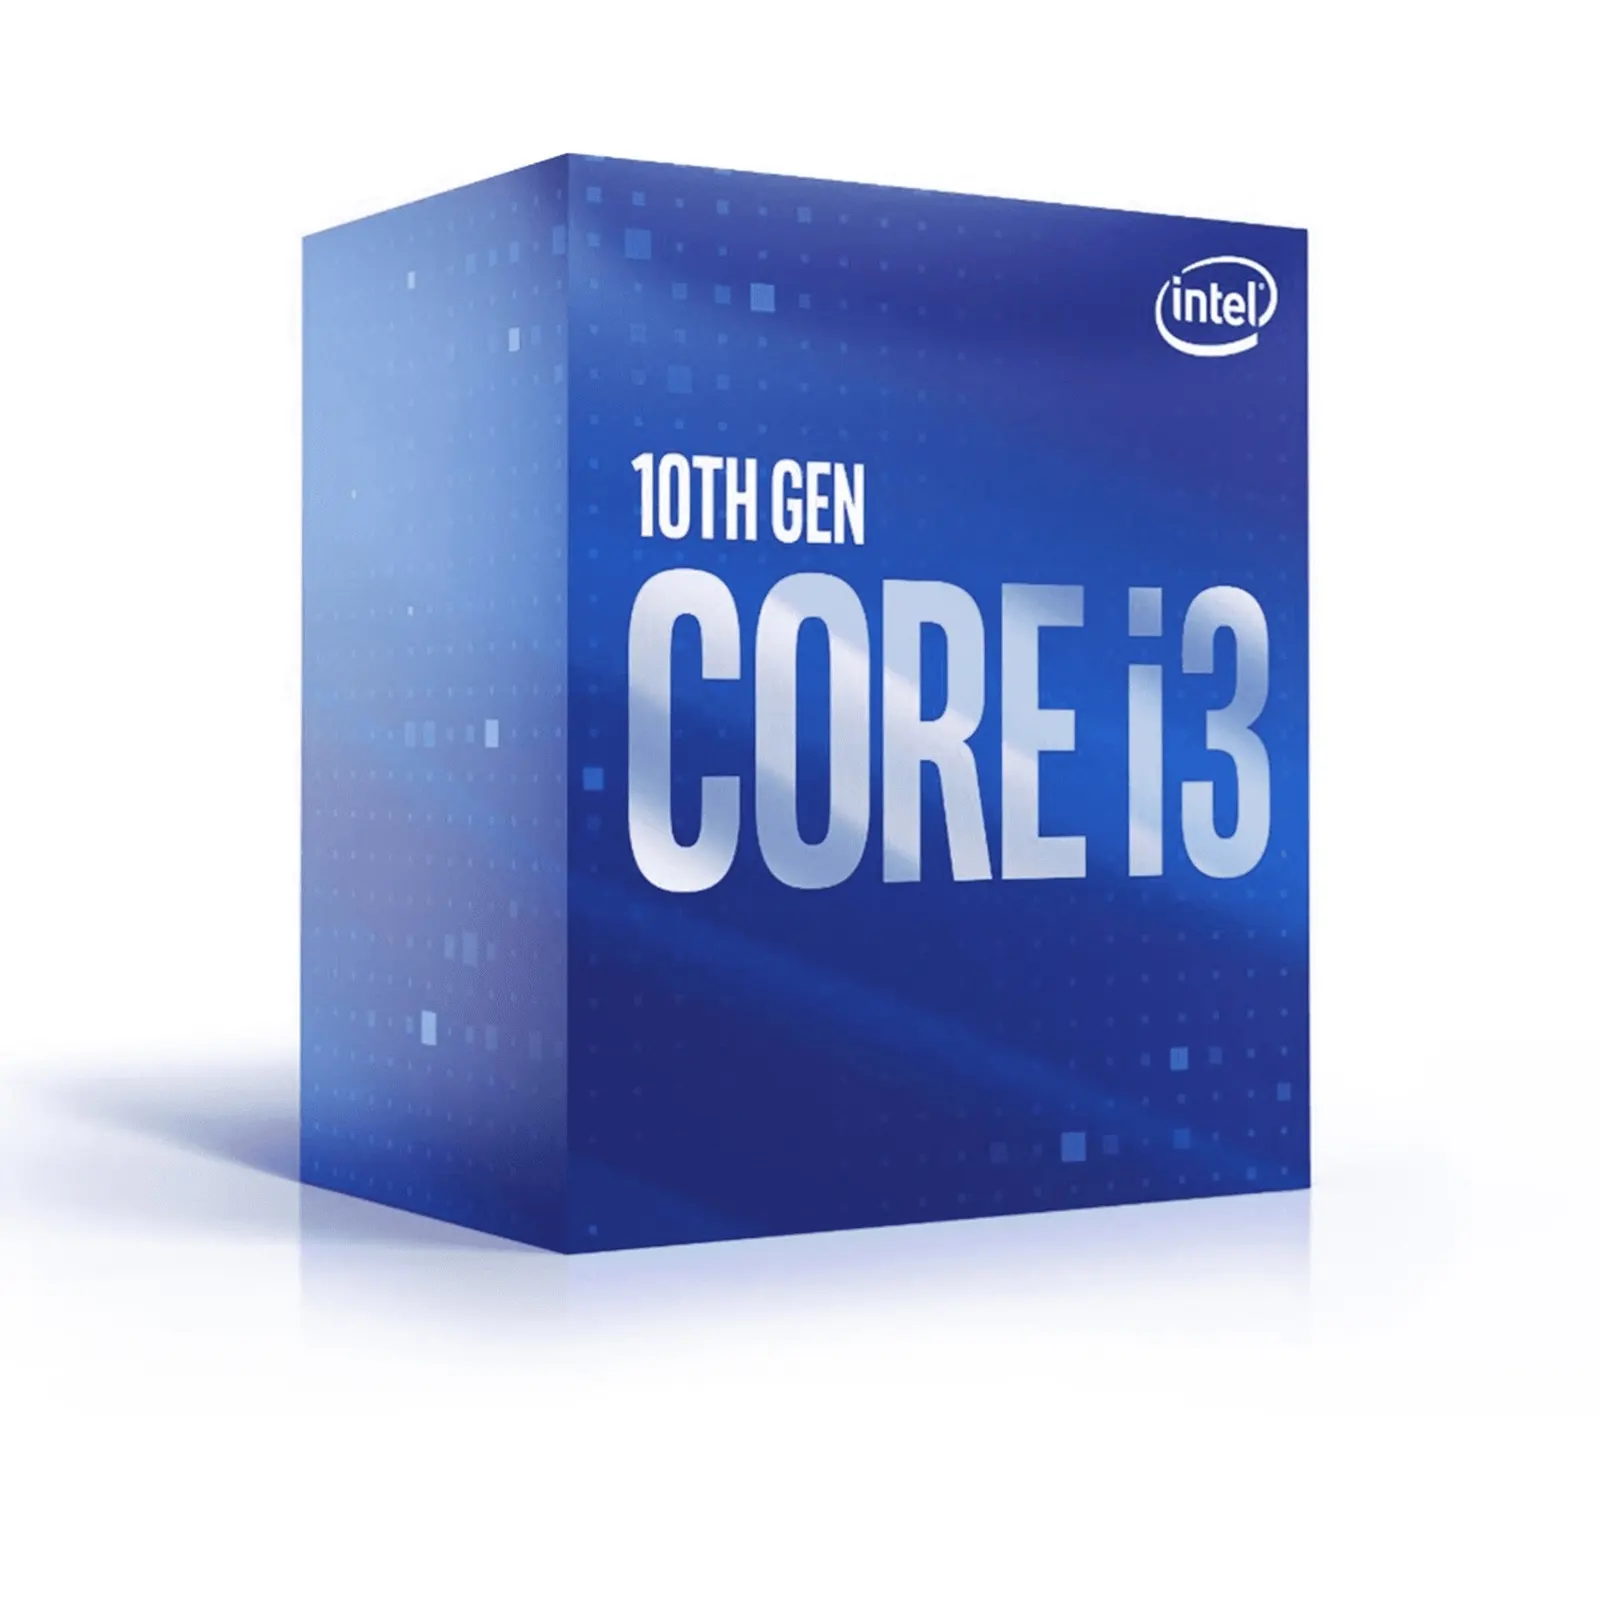 Intel Core i3 10100 3.6GHz 4 Core LGA 1200 Comet Lake Processor, 8 Threads, 4.3GHz Boost, Intel UHD 630 Graphics